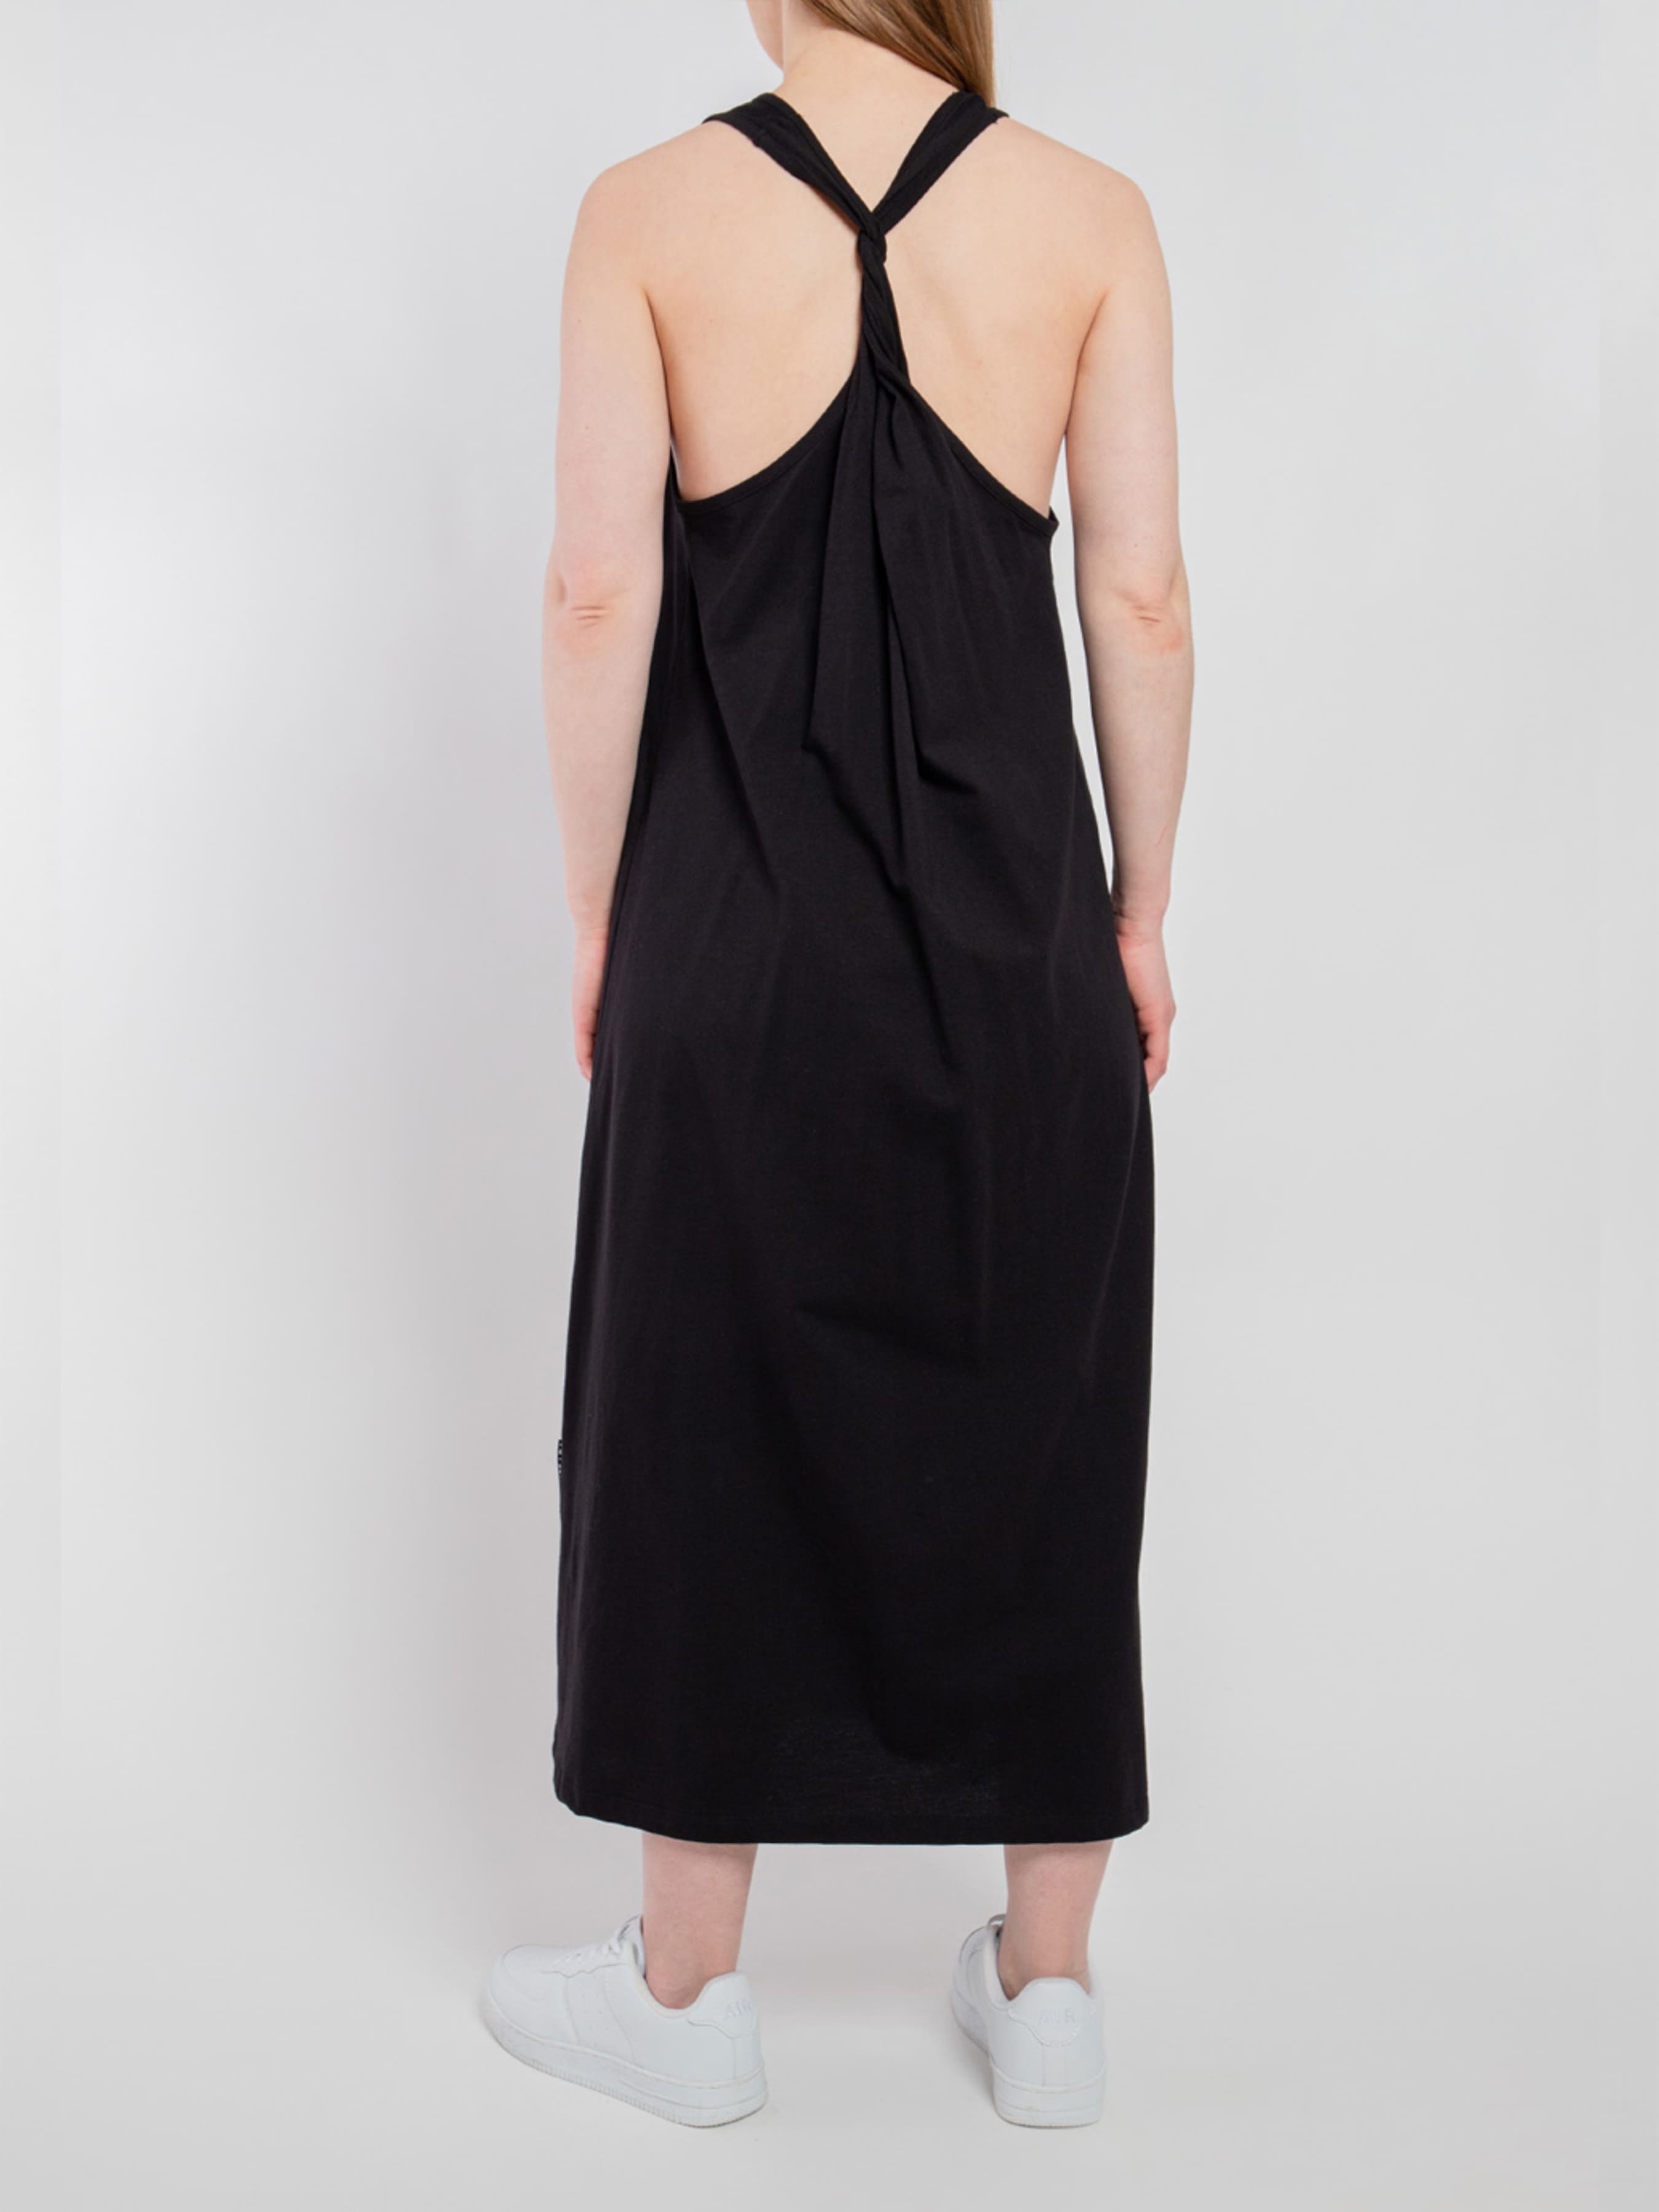 

J.B4 (Just Before) Платье макси (5WD5202) Женское, цвет - Чёрный